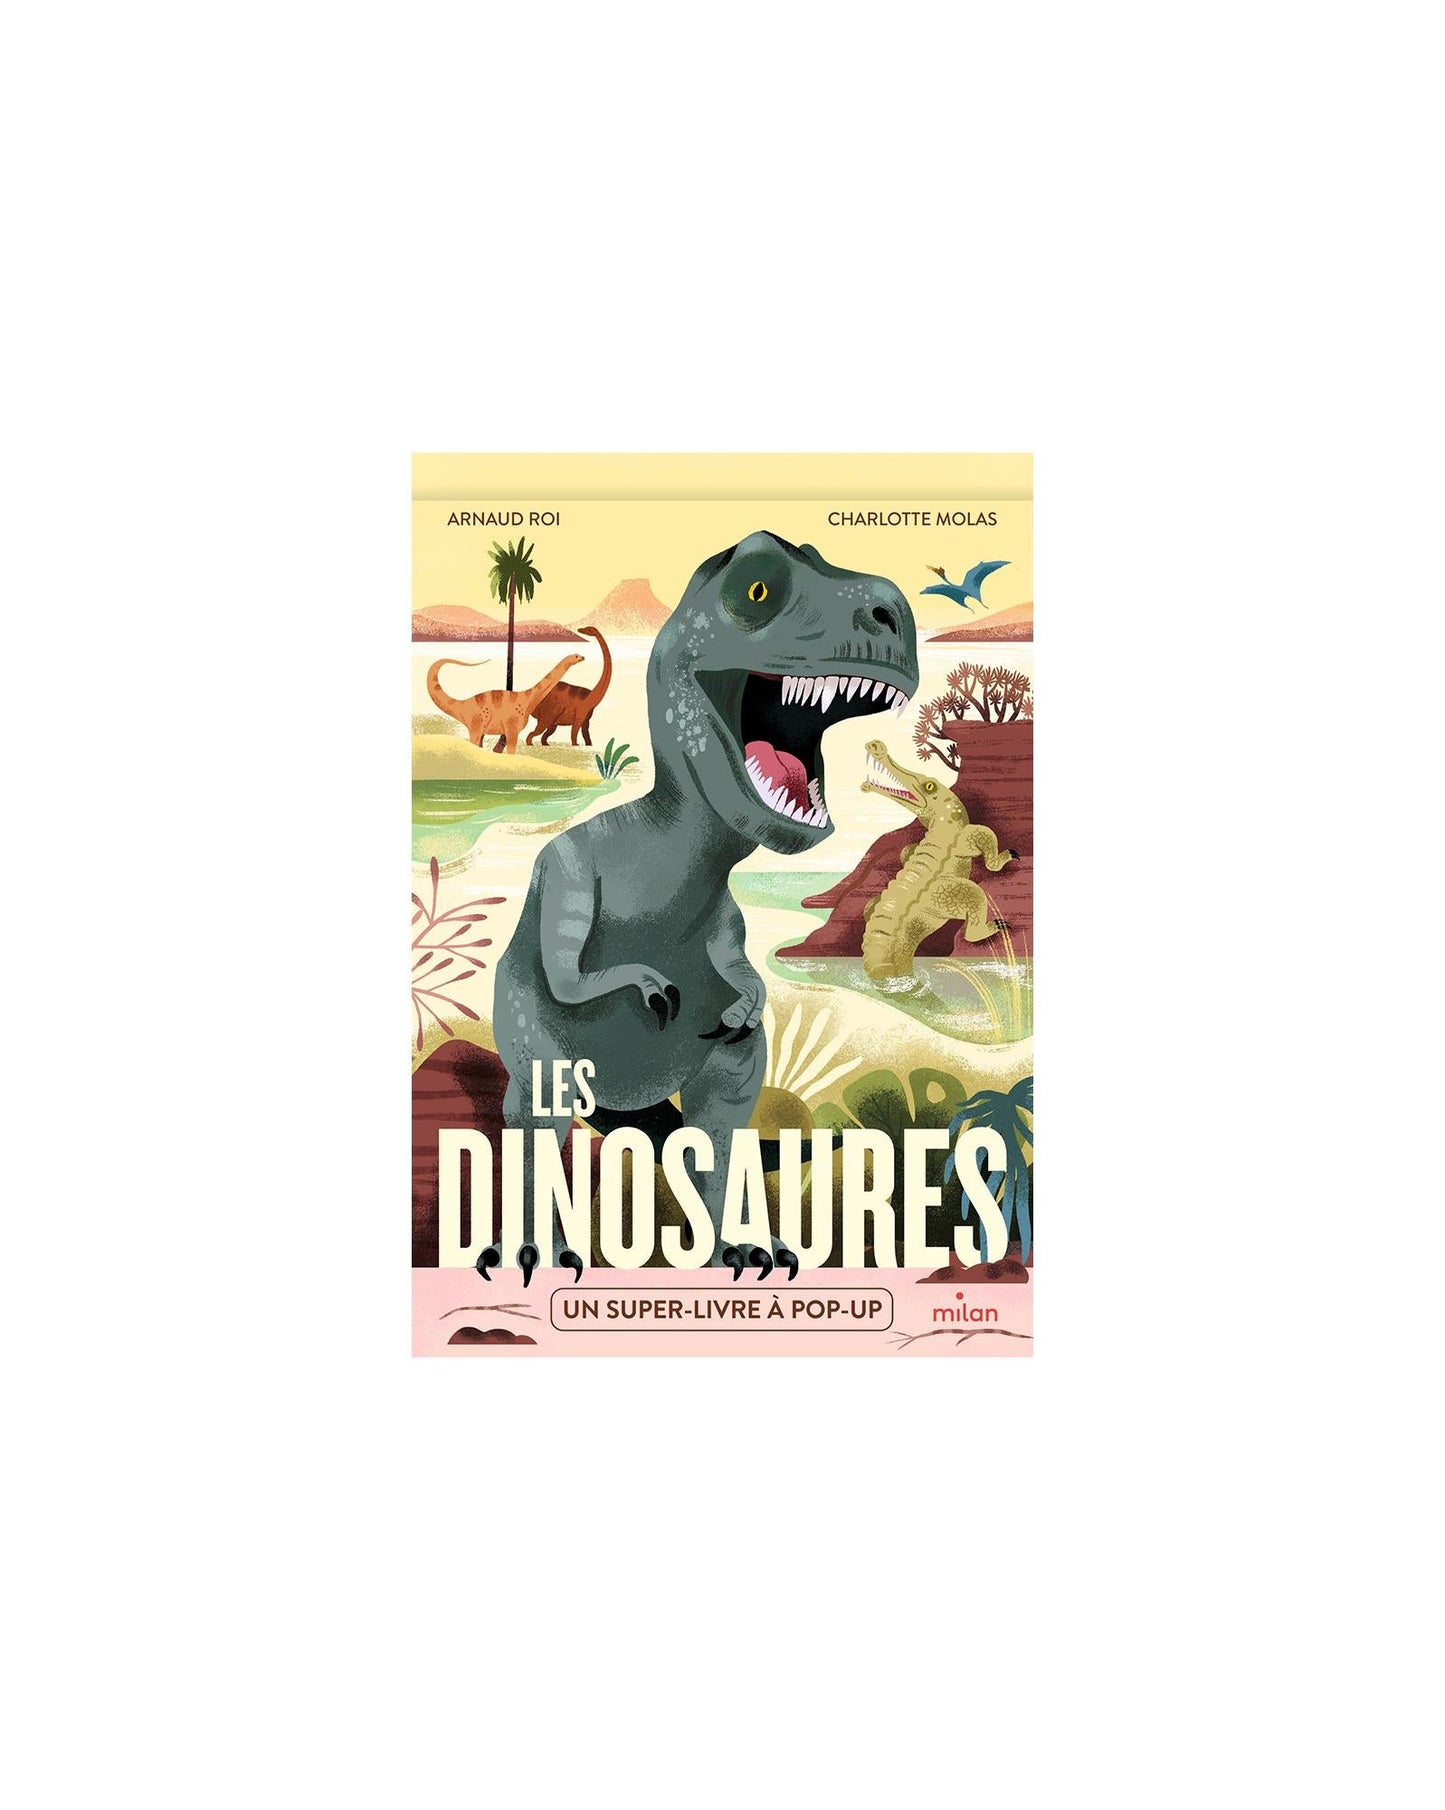 Dinosaurs' book